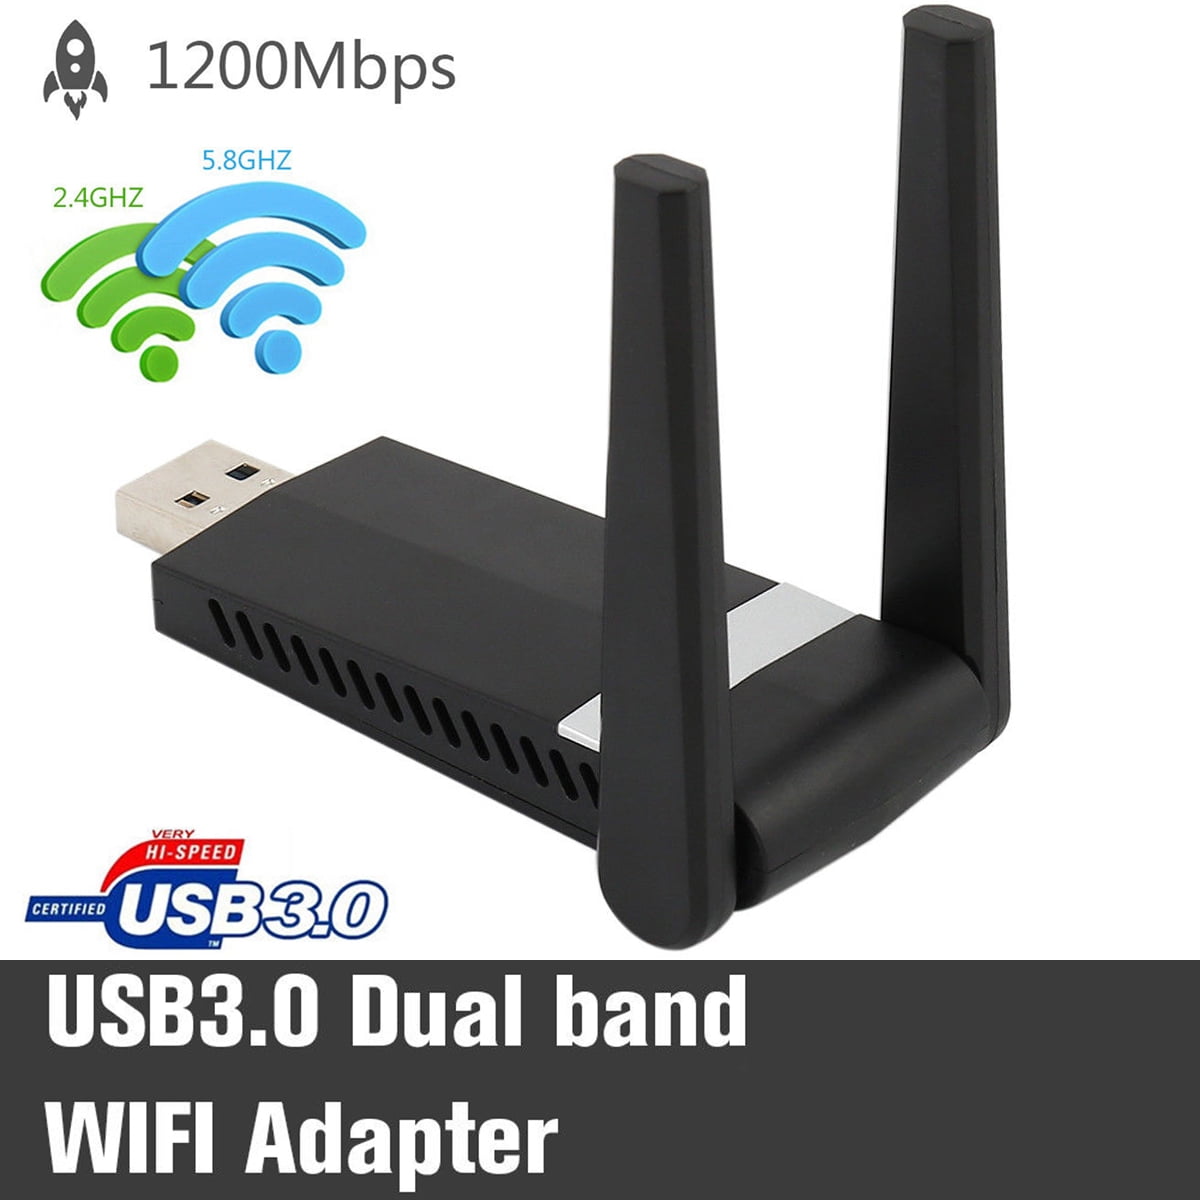 realtek 8812bu wireless lan 802.11ac usb nic 5ghz problems